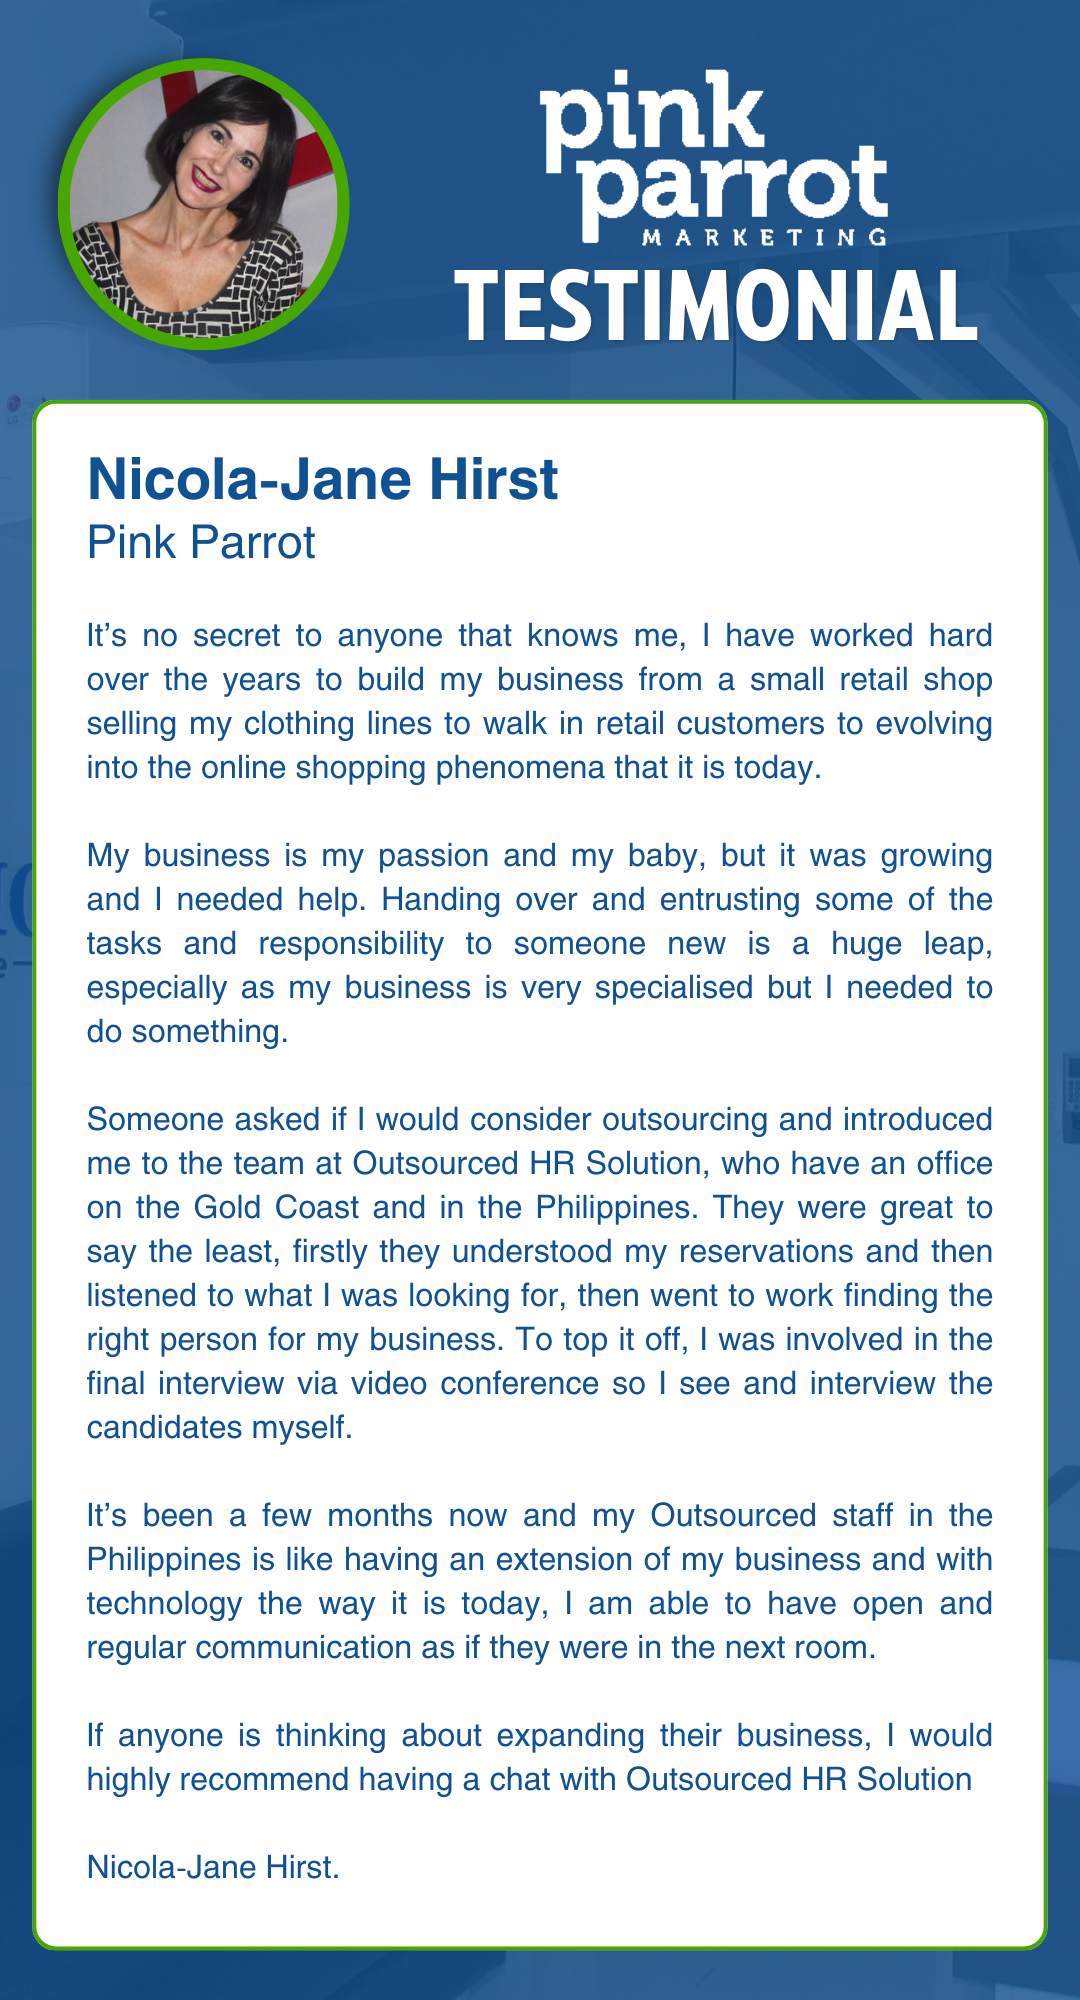 Nicola-Jane Hirst - Client Testimonial